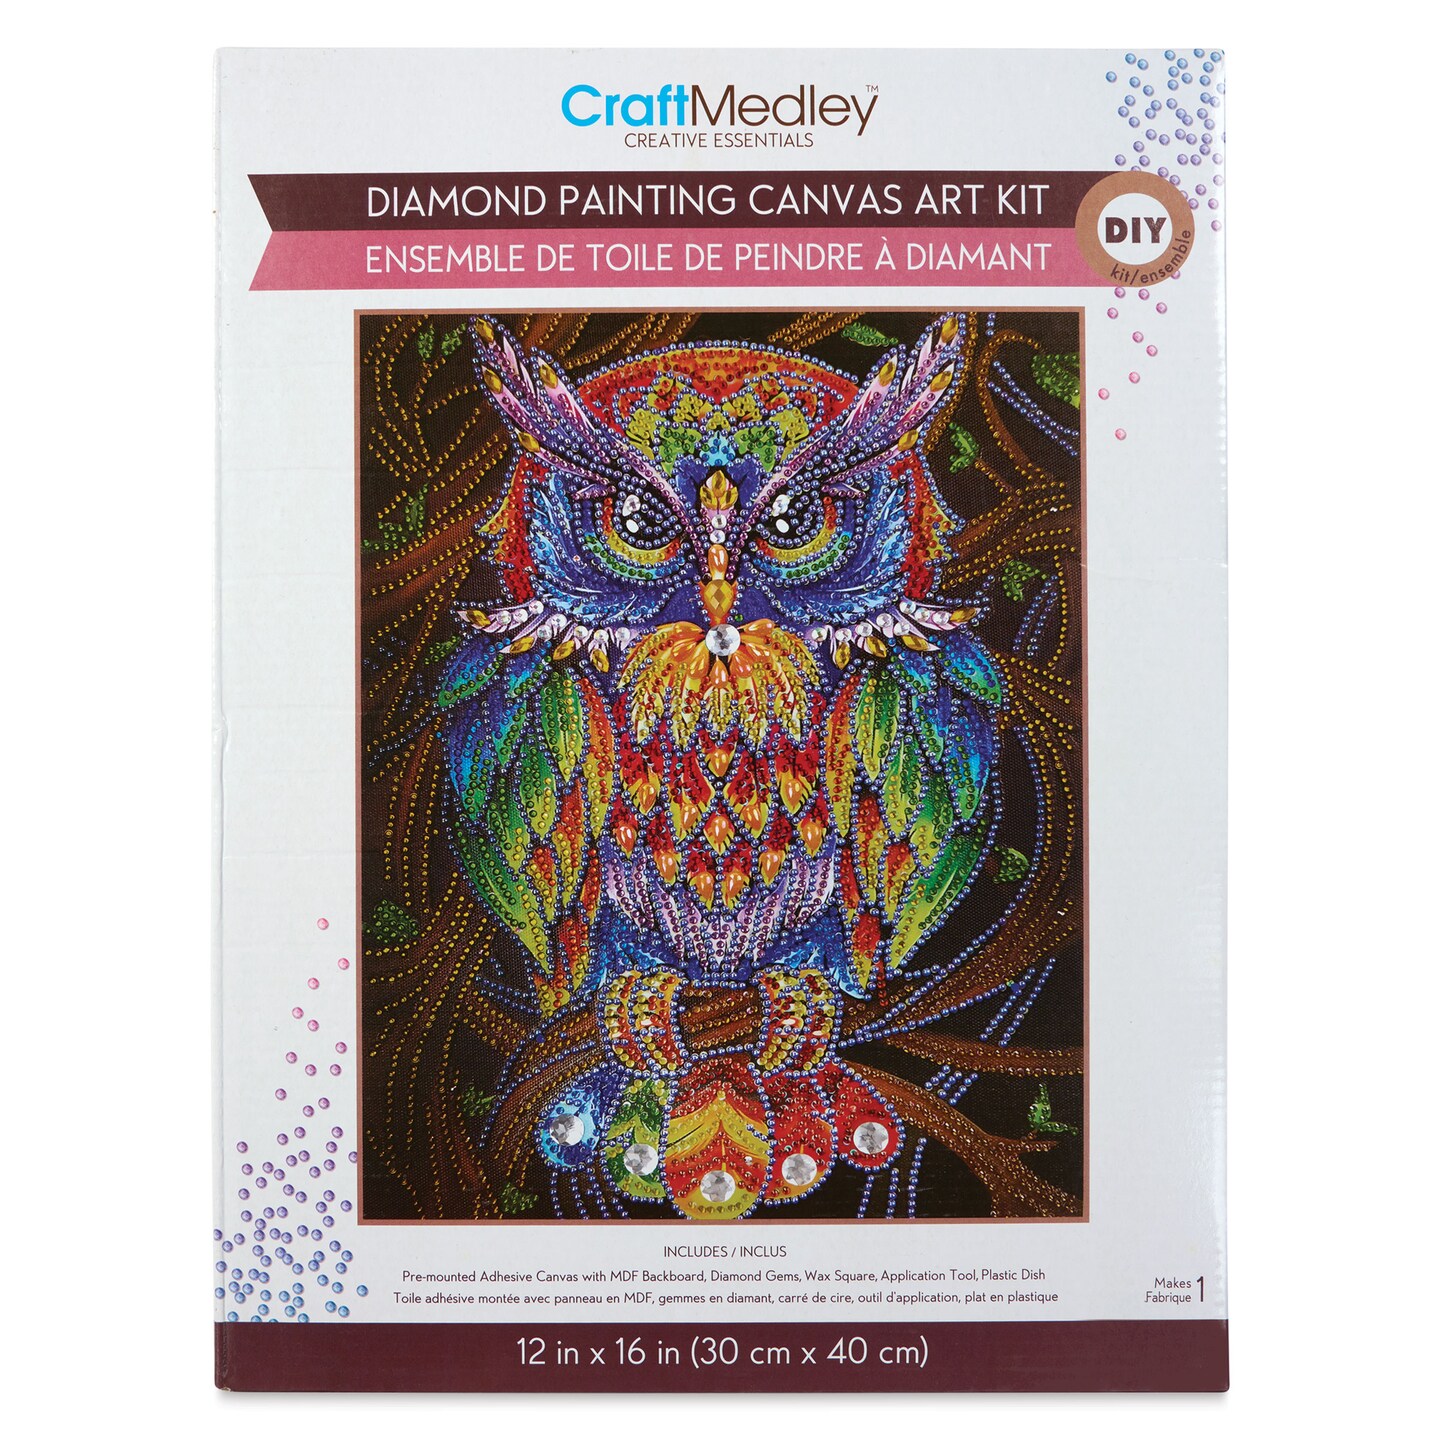 Craft Medley Diamond Painting Canvas Art Kit - Owl on Branch